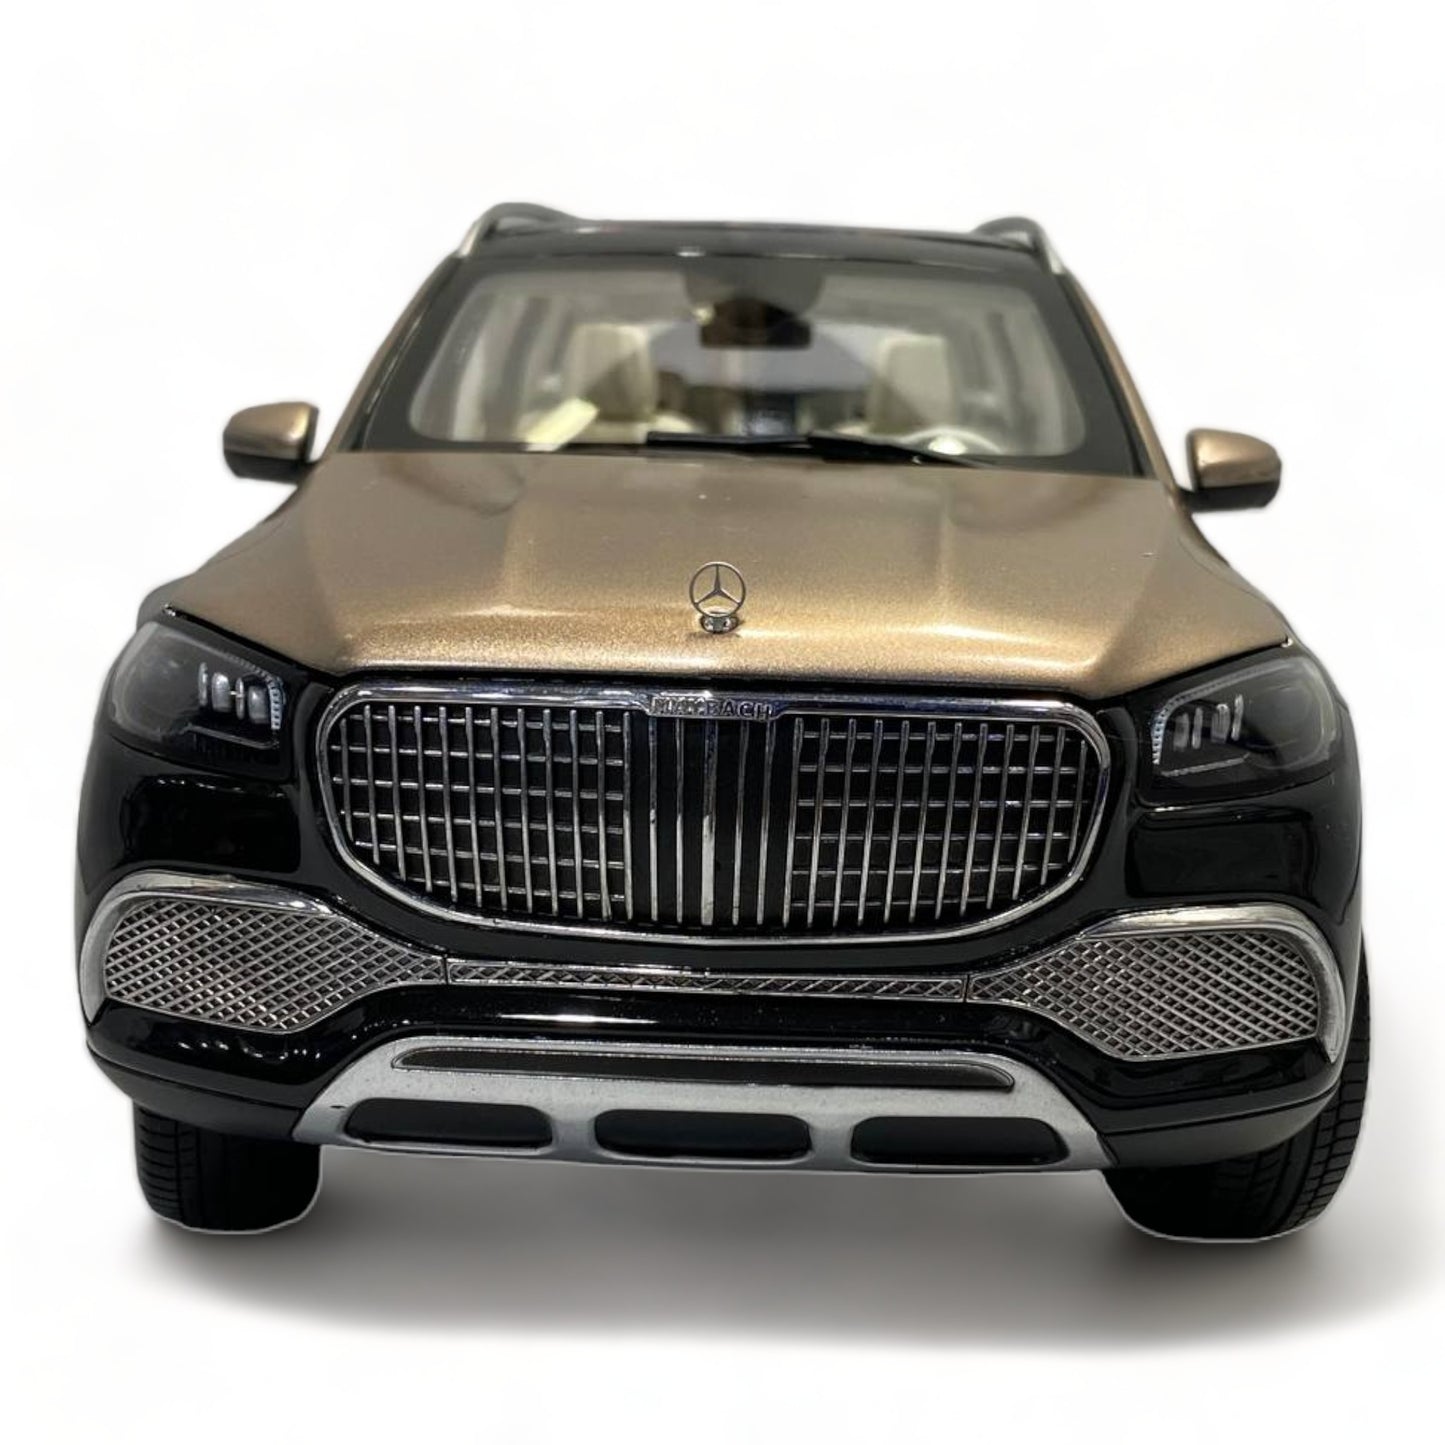 Mercedes Benz Maybach GLS 600 Black/Gold 1/18 by Paragon Models|Sold in Dturman.com Dubai UAE.